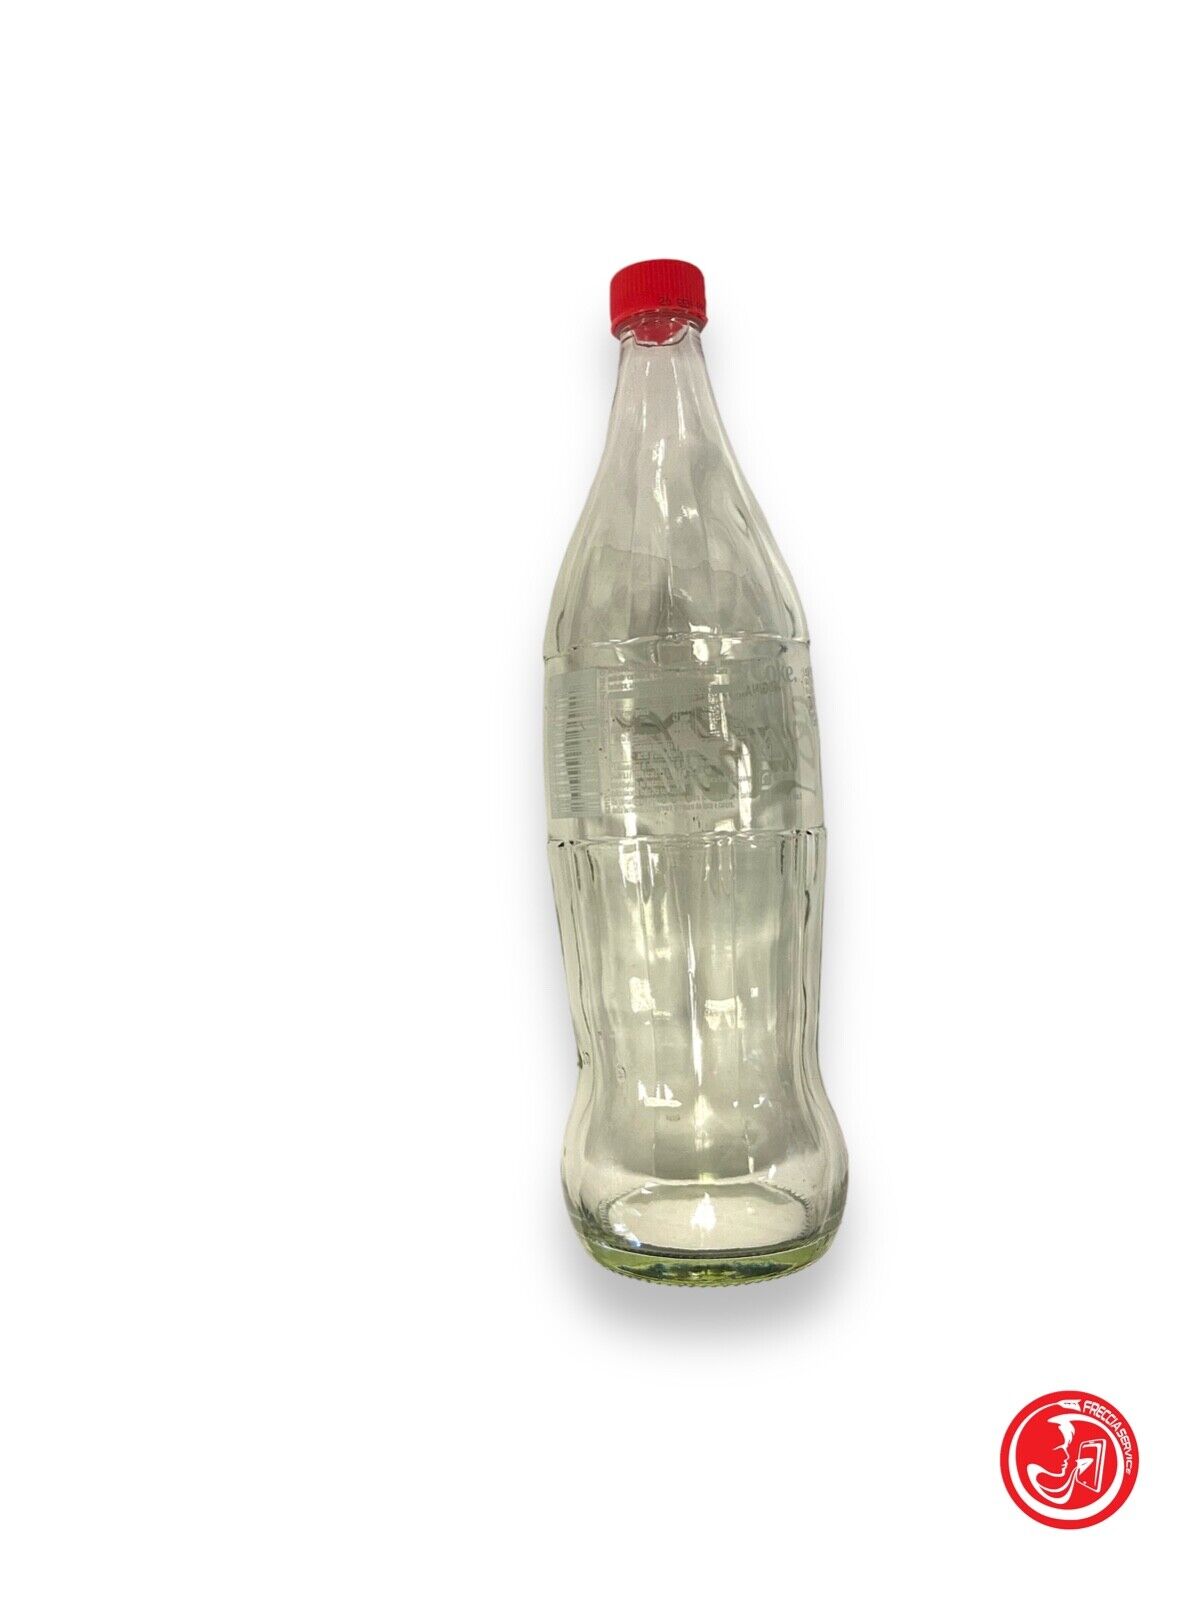 Collectible Coca-Cola bottle 